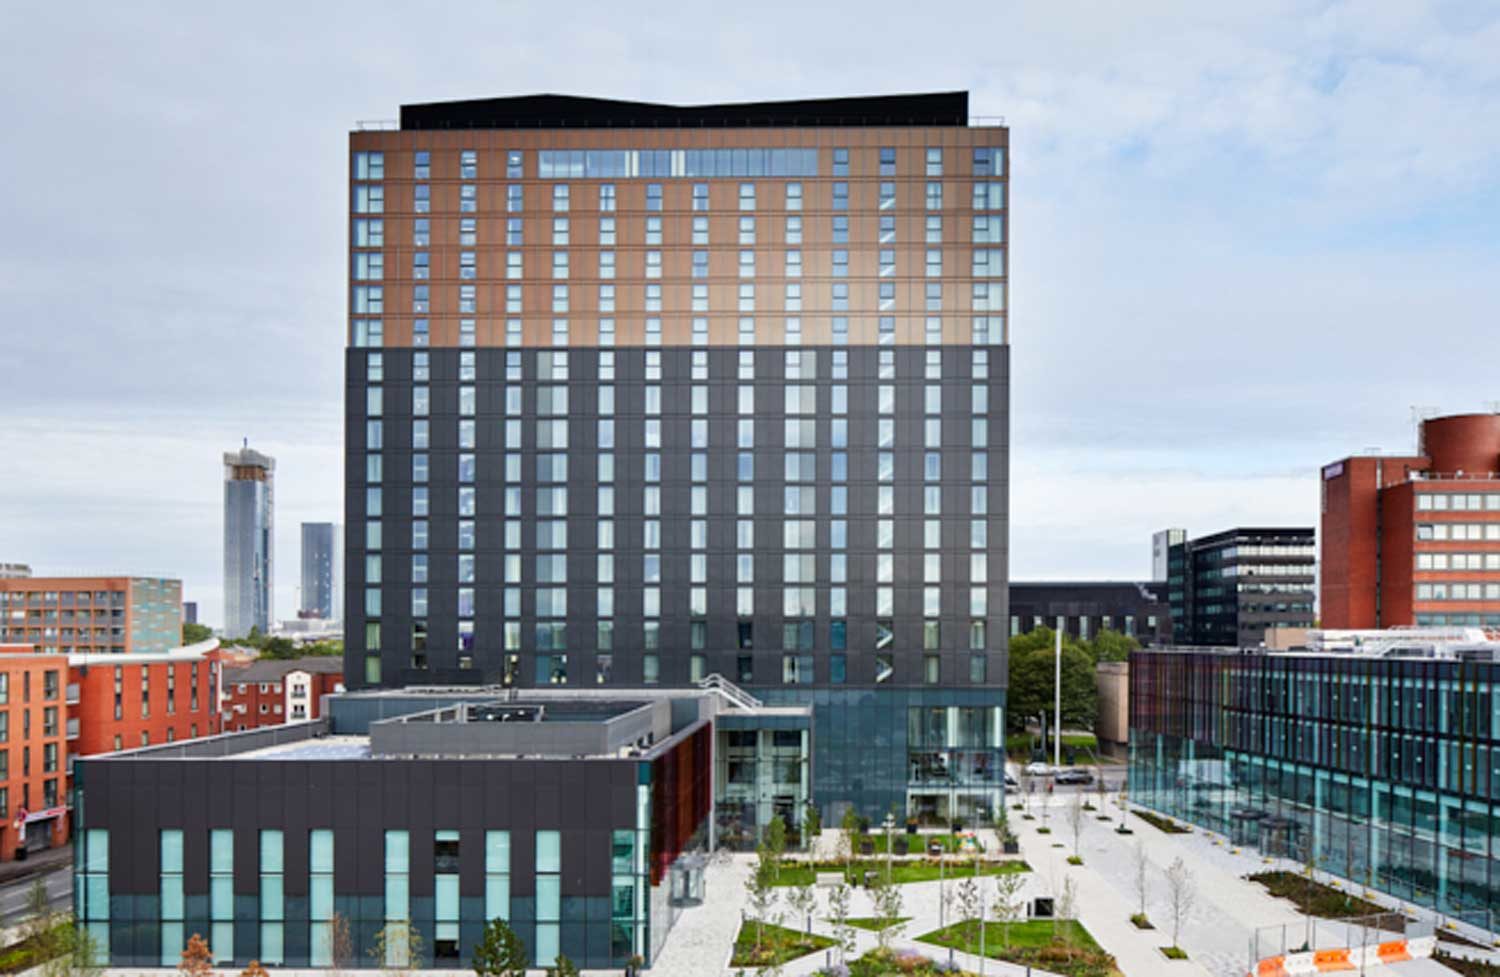 New Build Crowne Plaza, Staybridge Suites Hotel, Manchester